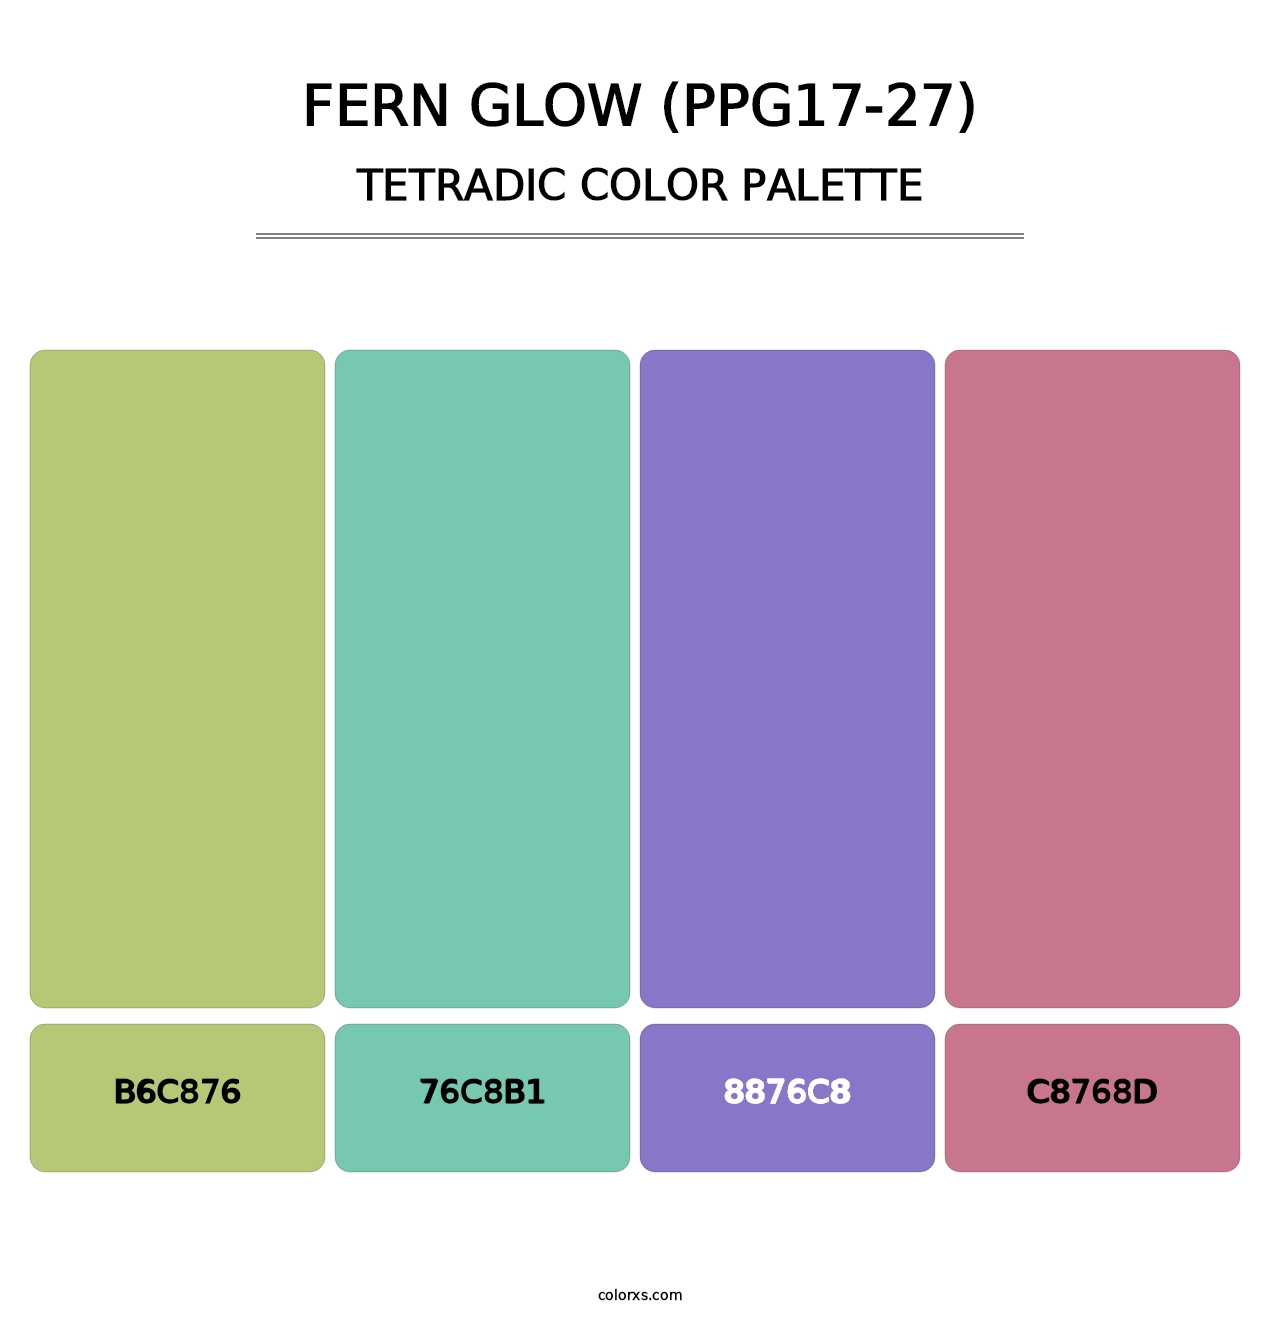 Fern Glow (PPG17-27) - Tetradic Color Palette